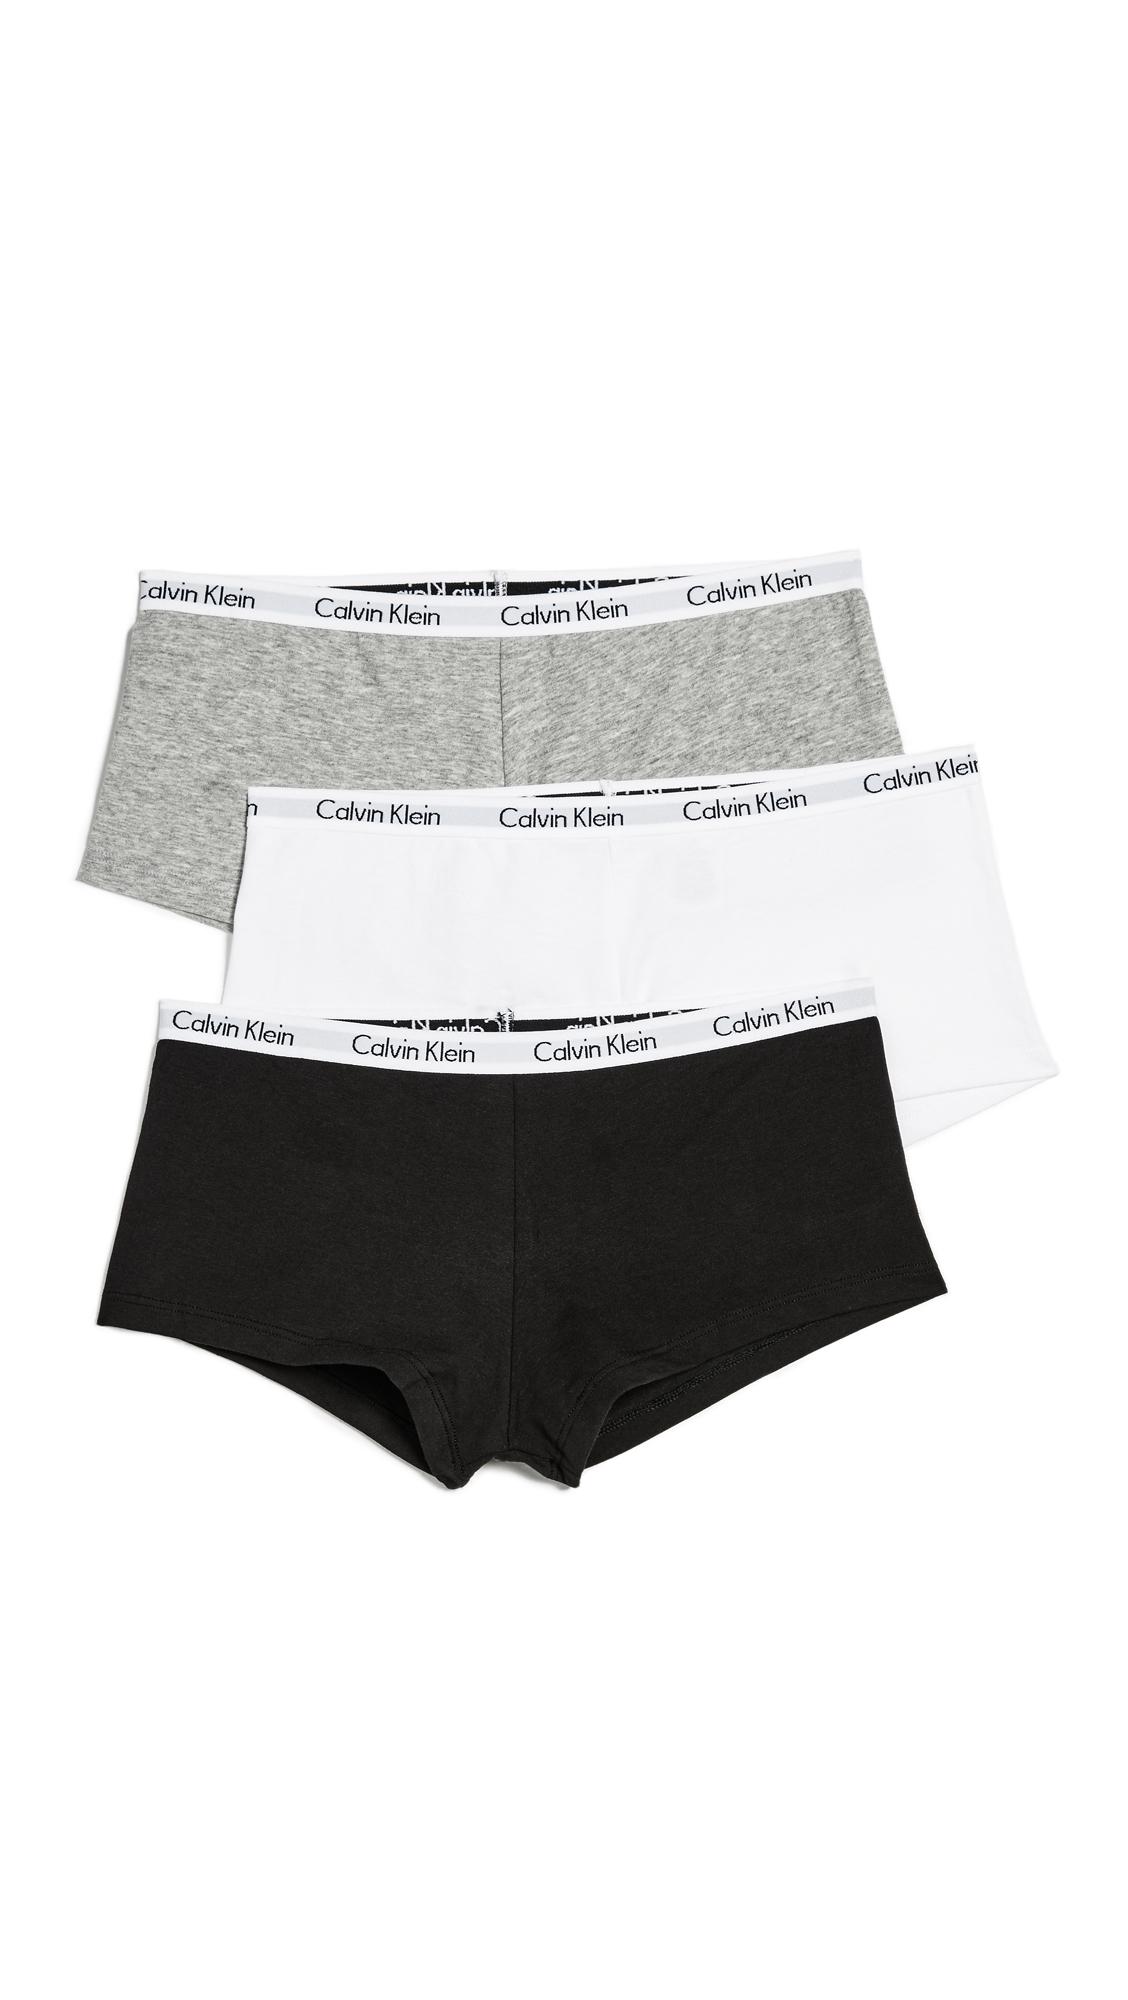 Calvin Klein Cotton Carousel 3 Pack Boyshorts in Black/Grey Heather/White  (Gray) - Lyst